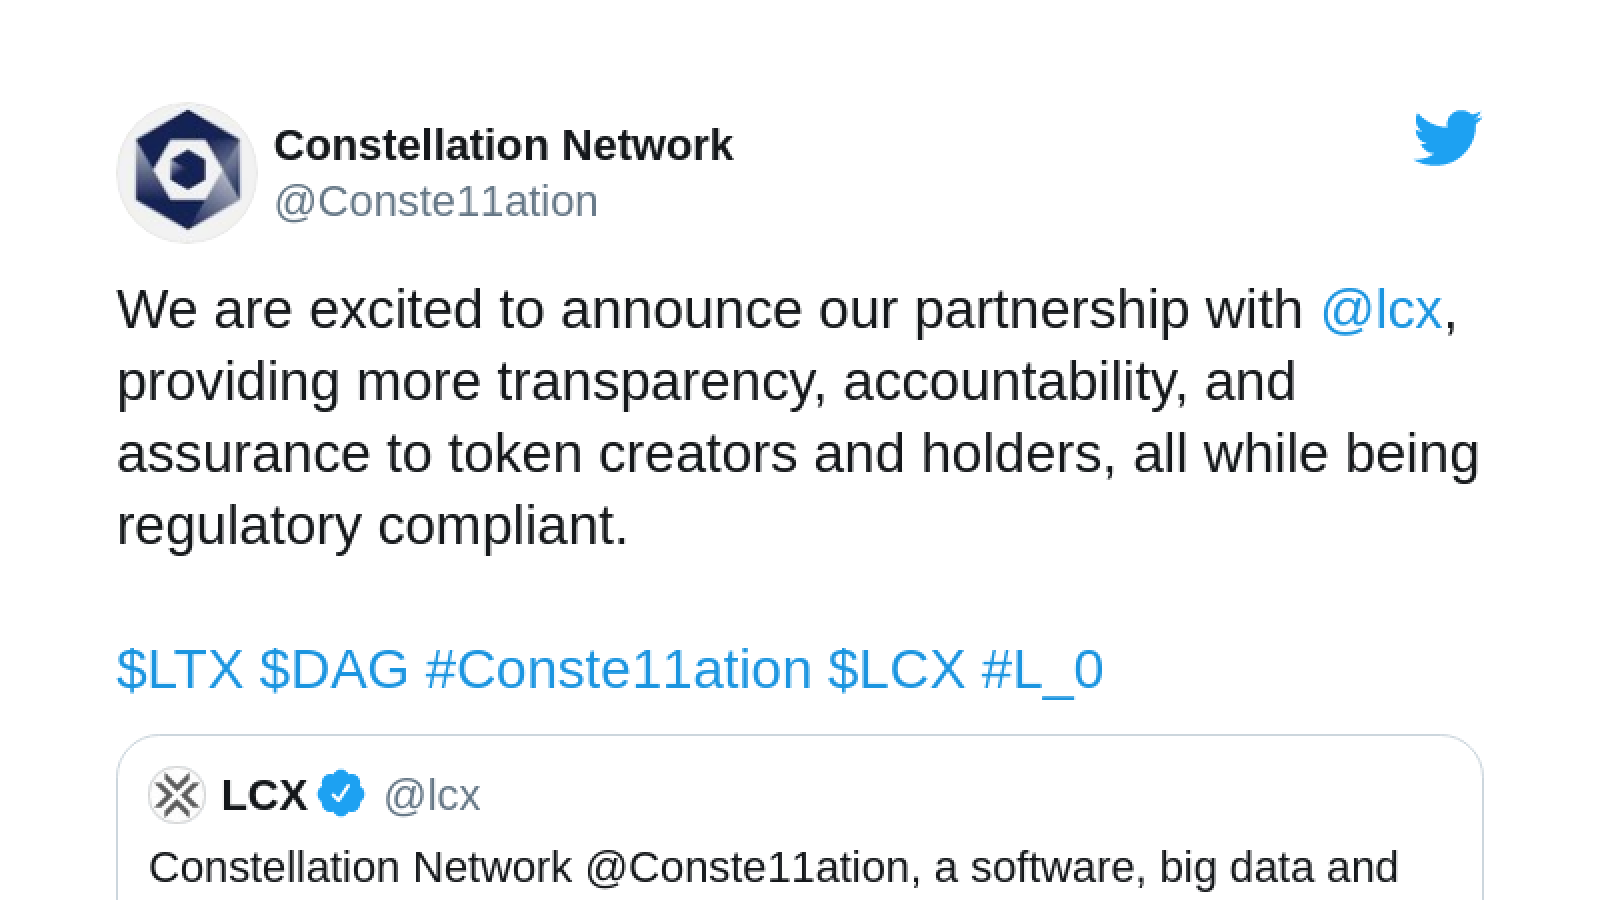 Constellation Network partners LSX